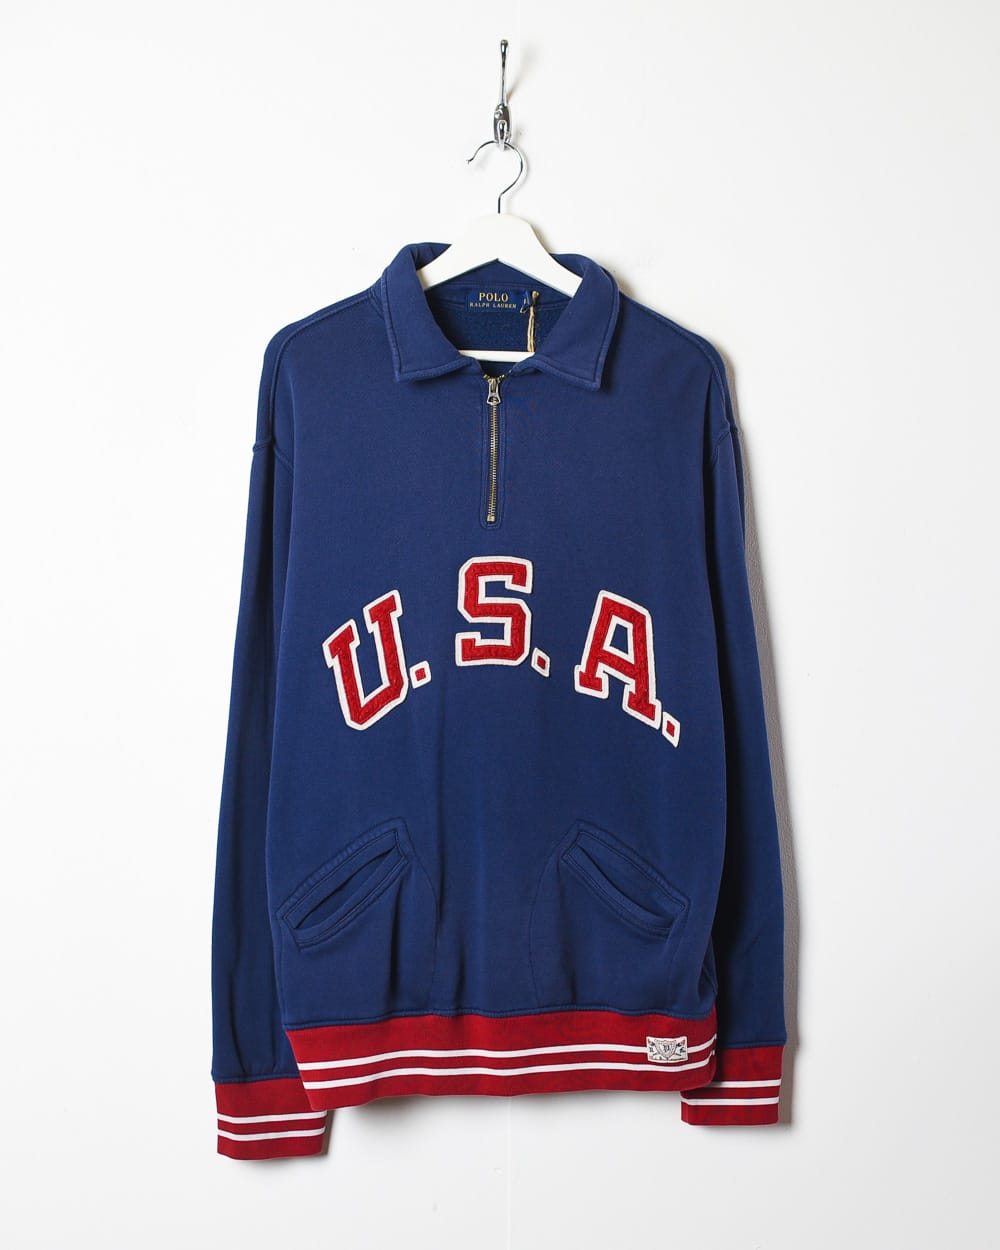 Polo Ralph Lauren USA 1/4 Zip Sweatshirt - Large | Domno Vintage